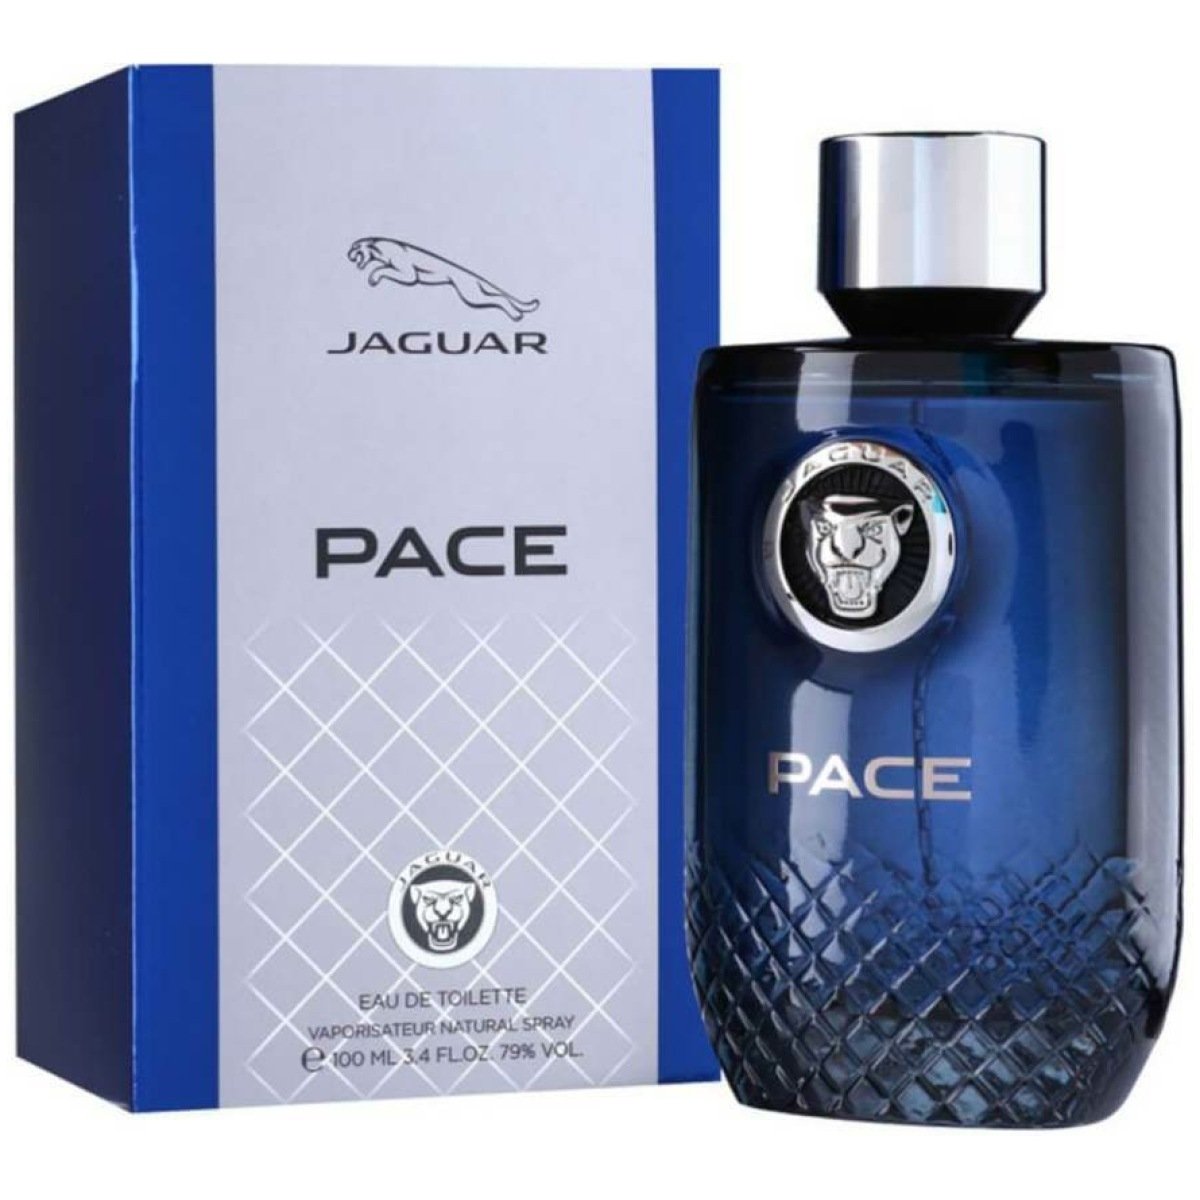 Jaguar Pace EDT Perfume For Men 100 ml